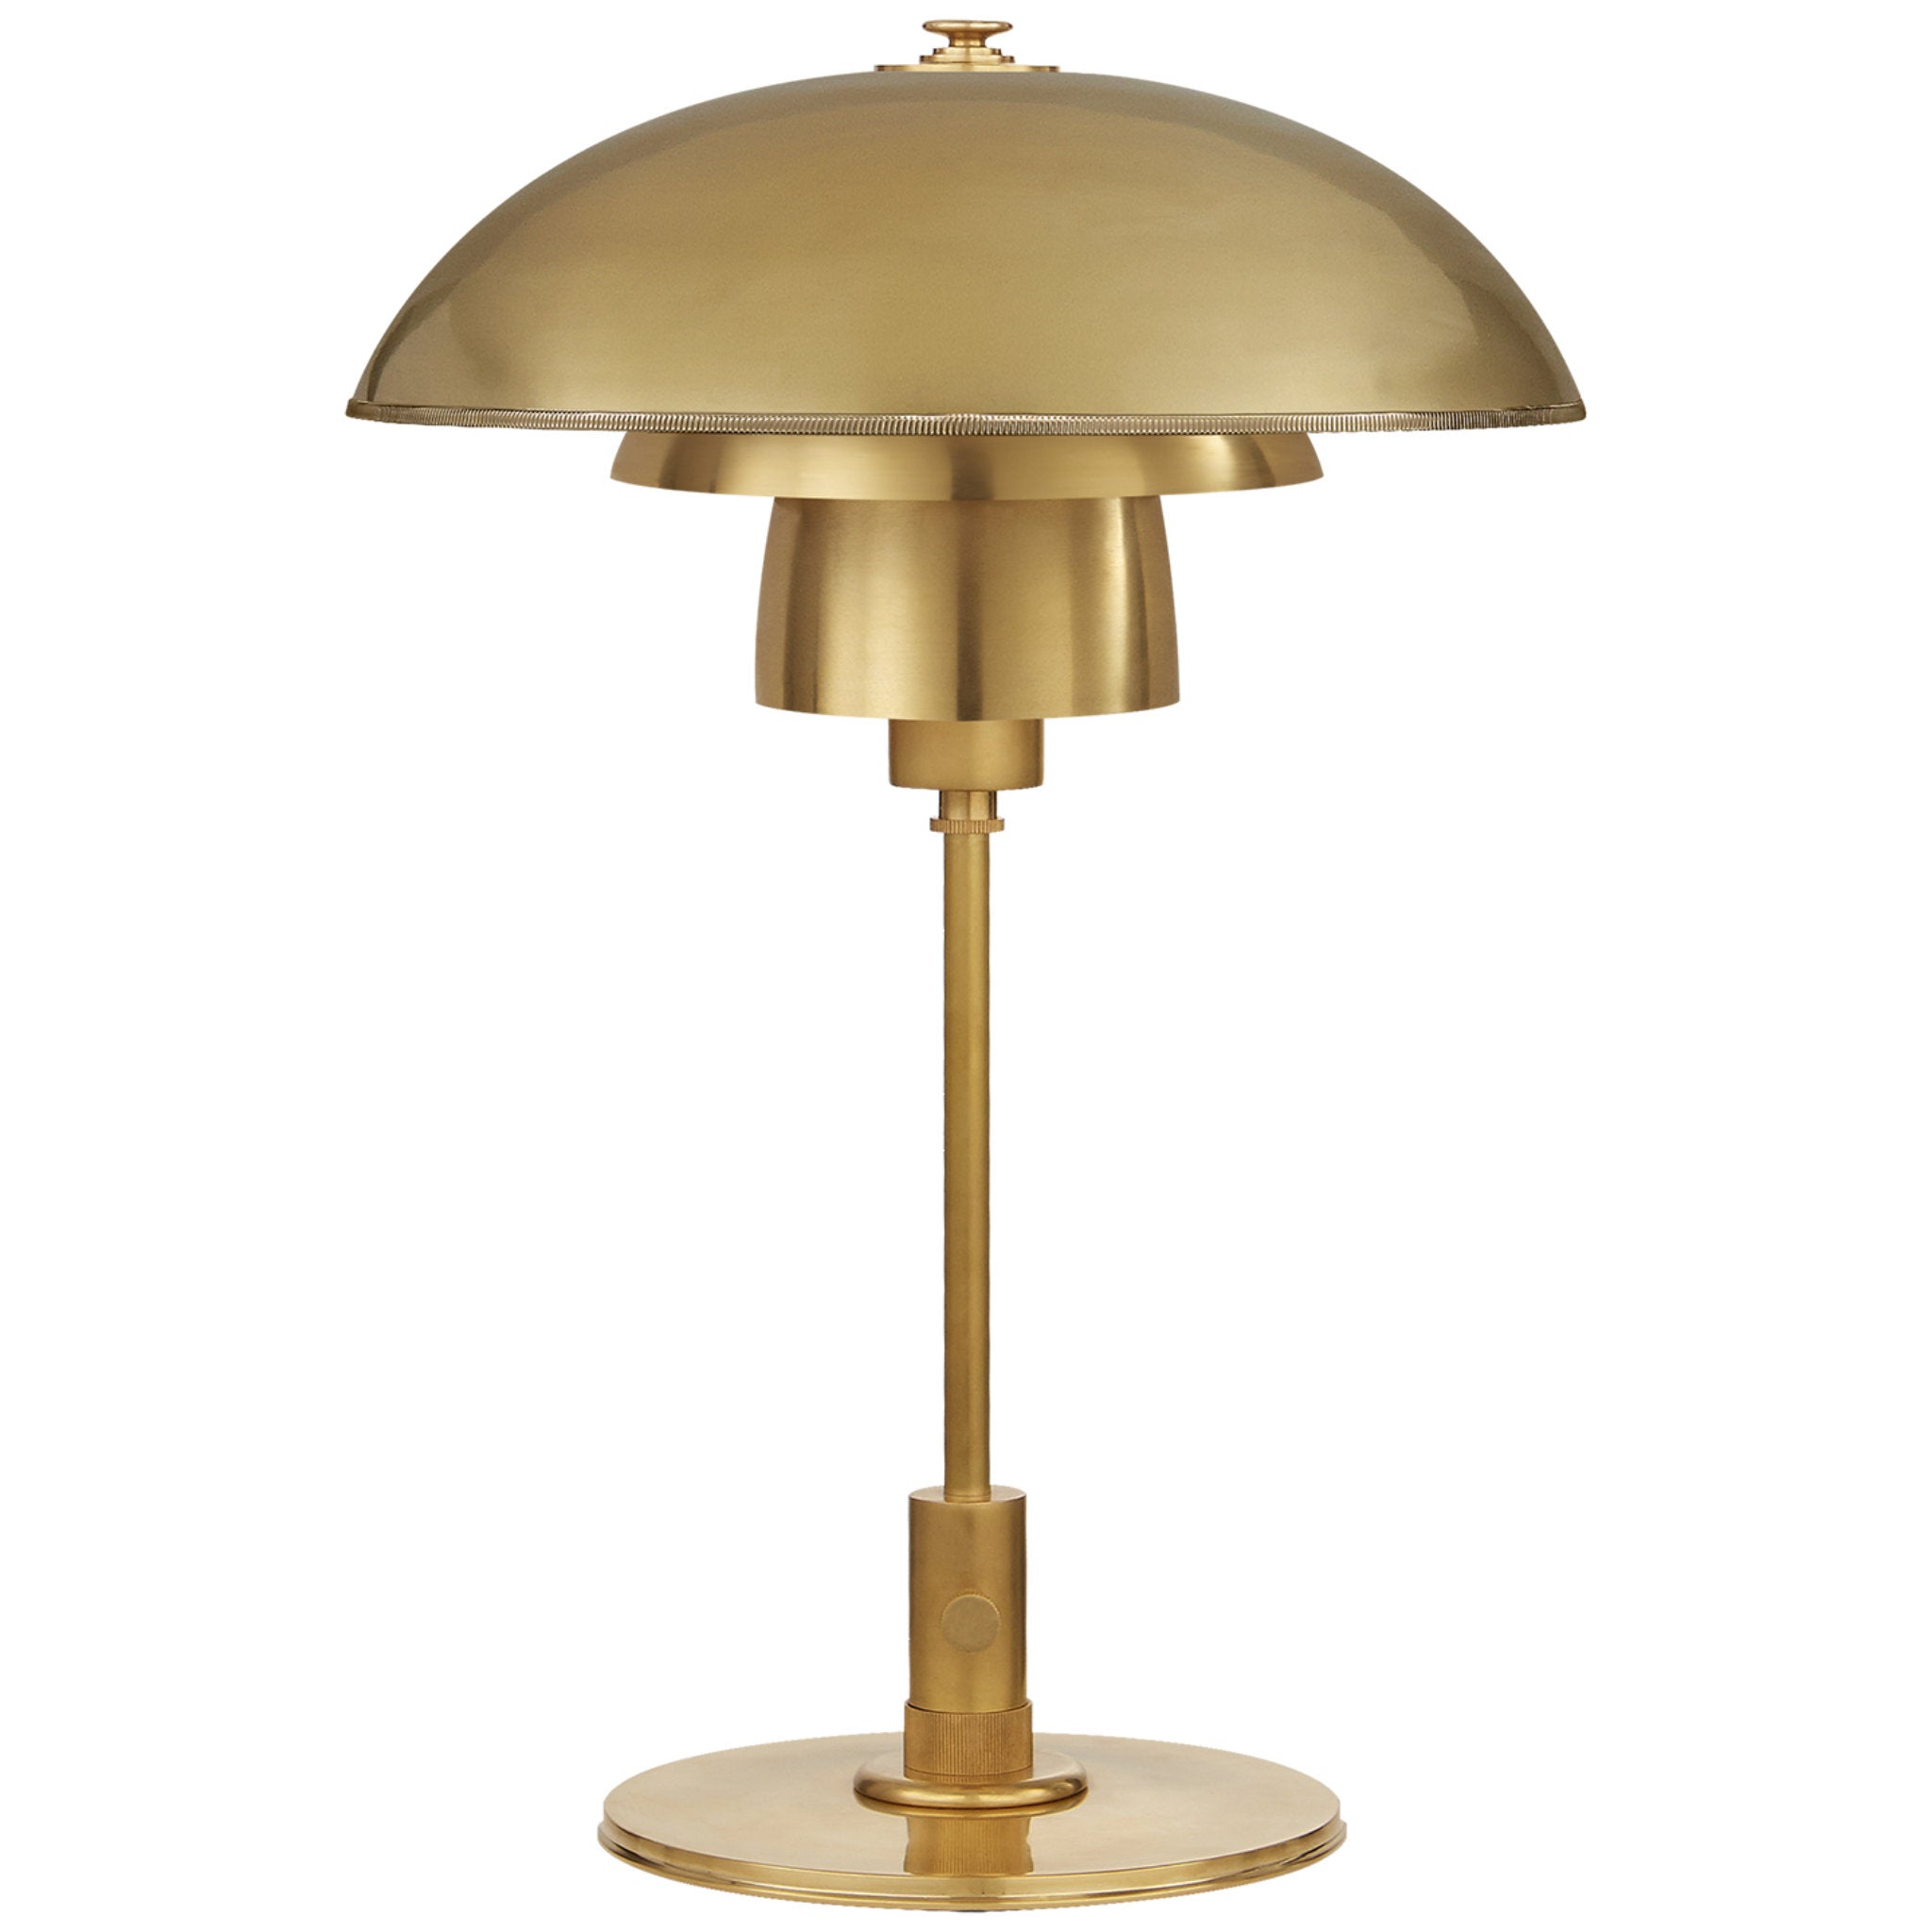 Thomas O'Brien Whitman Desk Lamp in Hand-Rubbed Antique Brass with Hand-Rubbed Antique Brass Shade